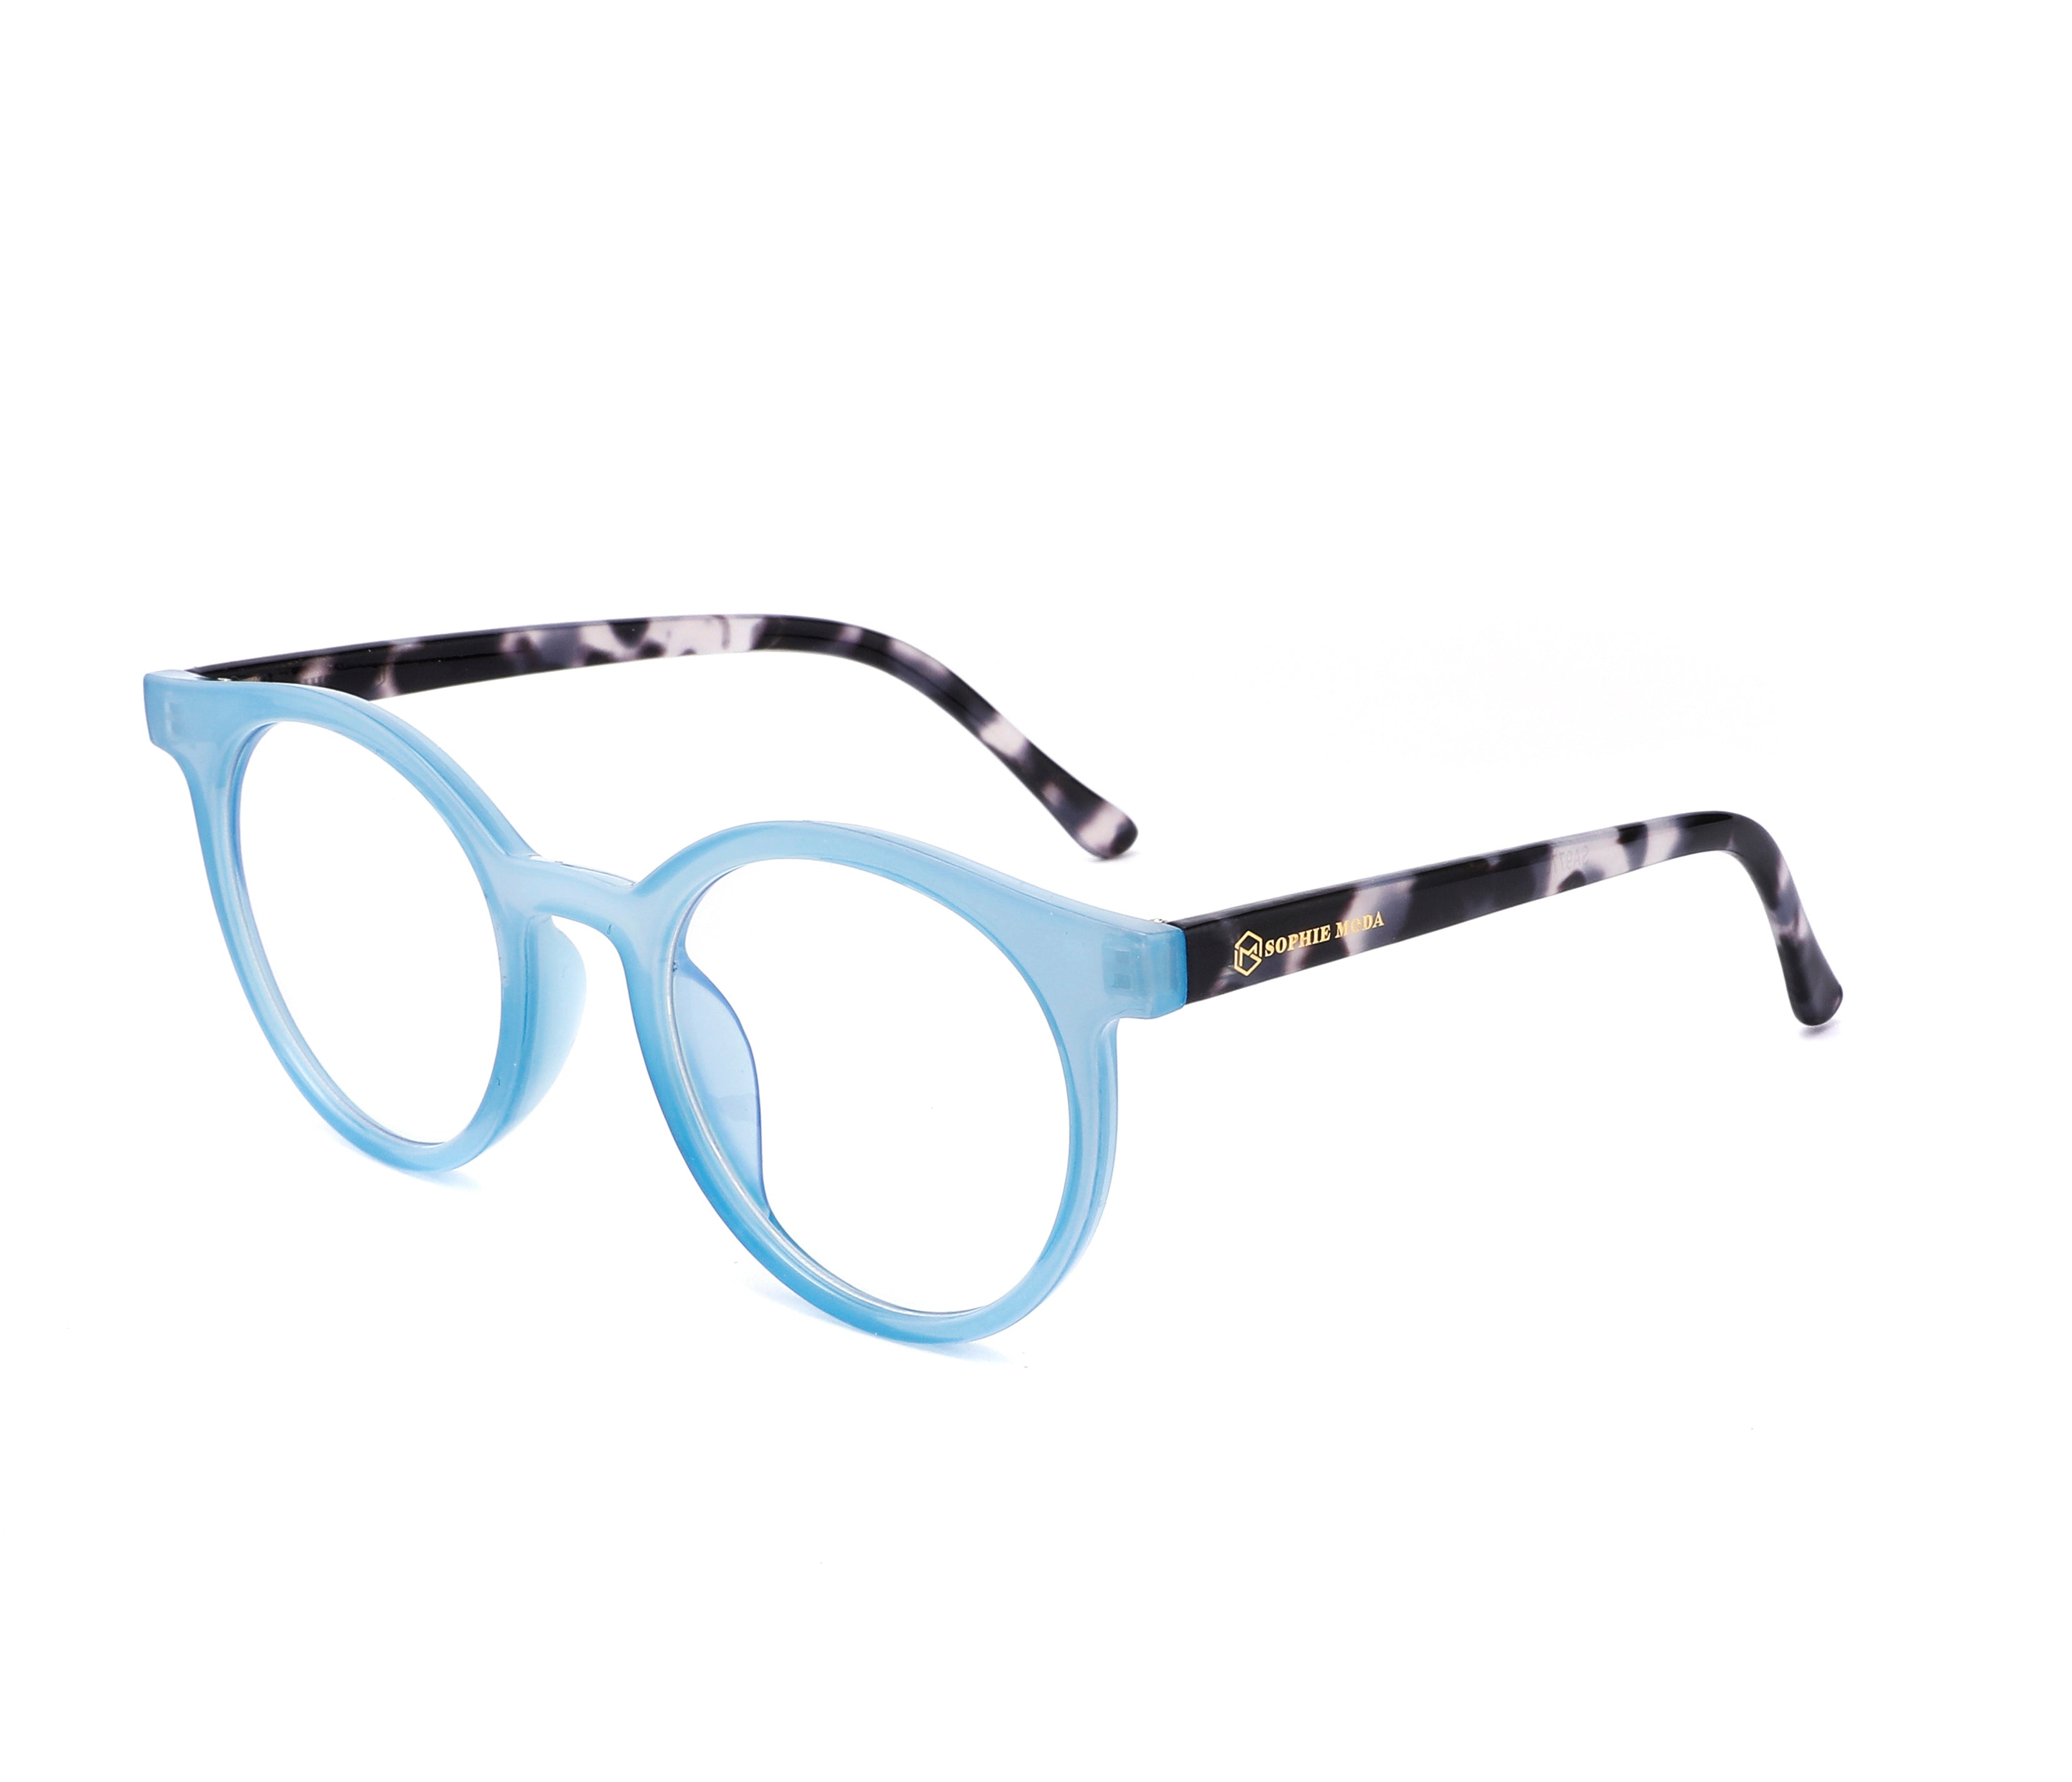 Glasses: Anti-Blue Light Sweet Sensations